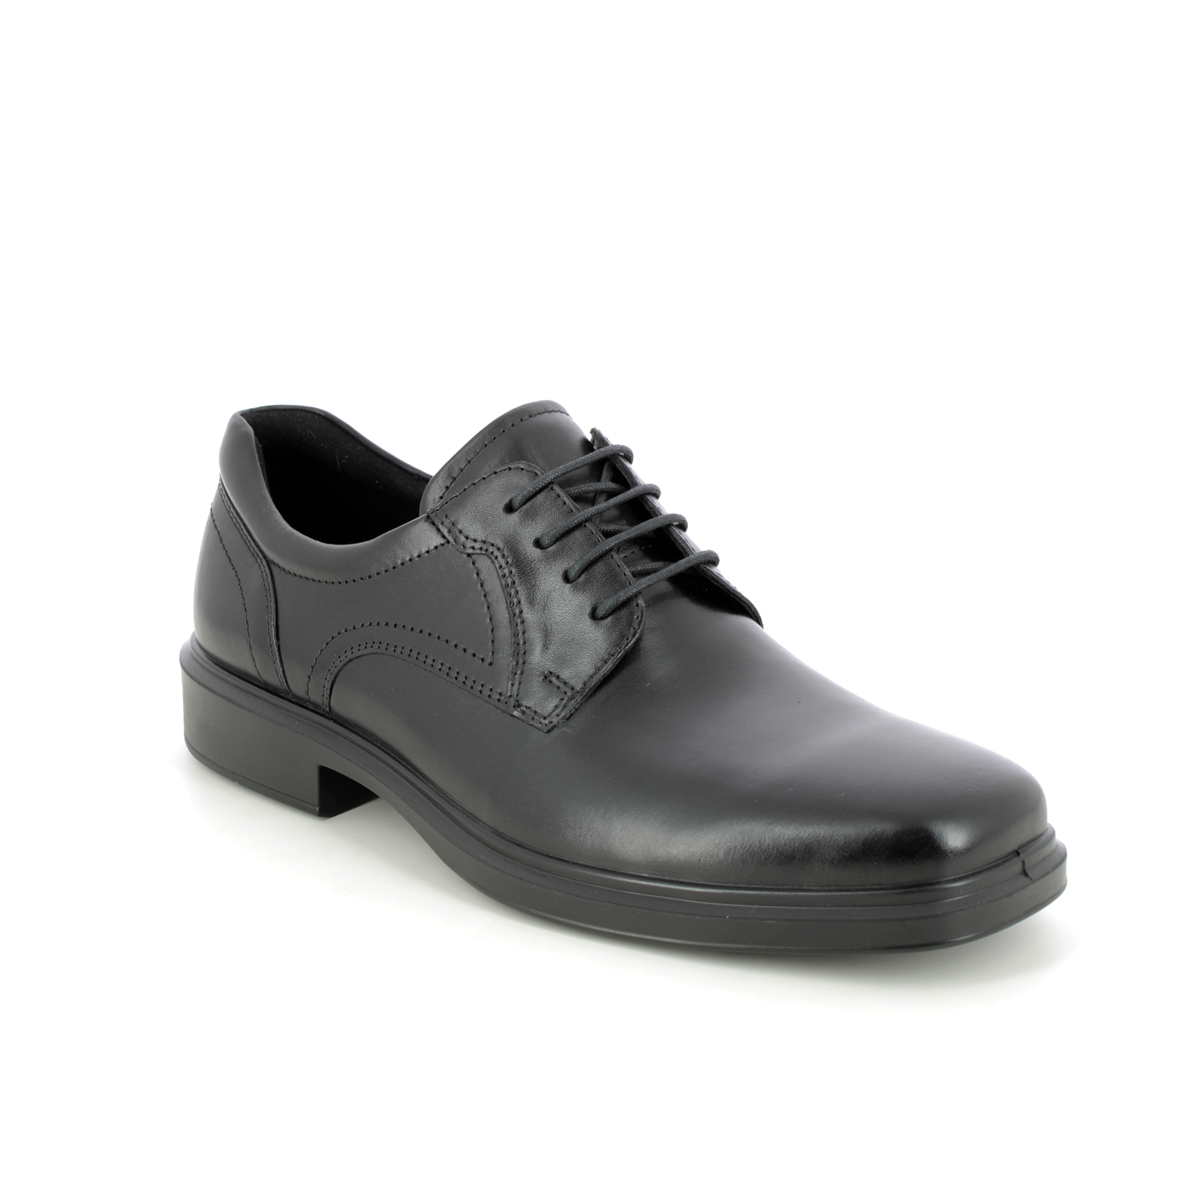 Ecco Helsinki 2 Plain Black Leather Mens Formal Shoes 500164-01001 In Size 45 In Plain Black Leather